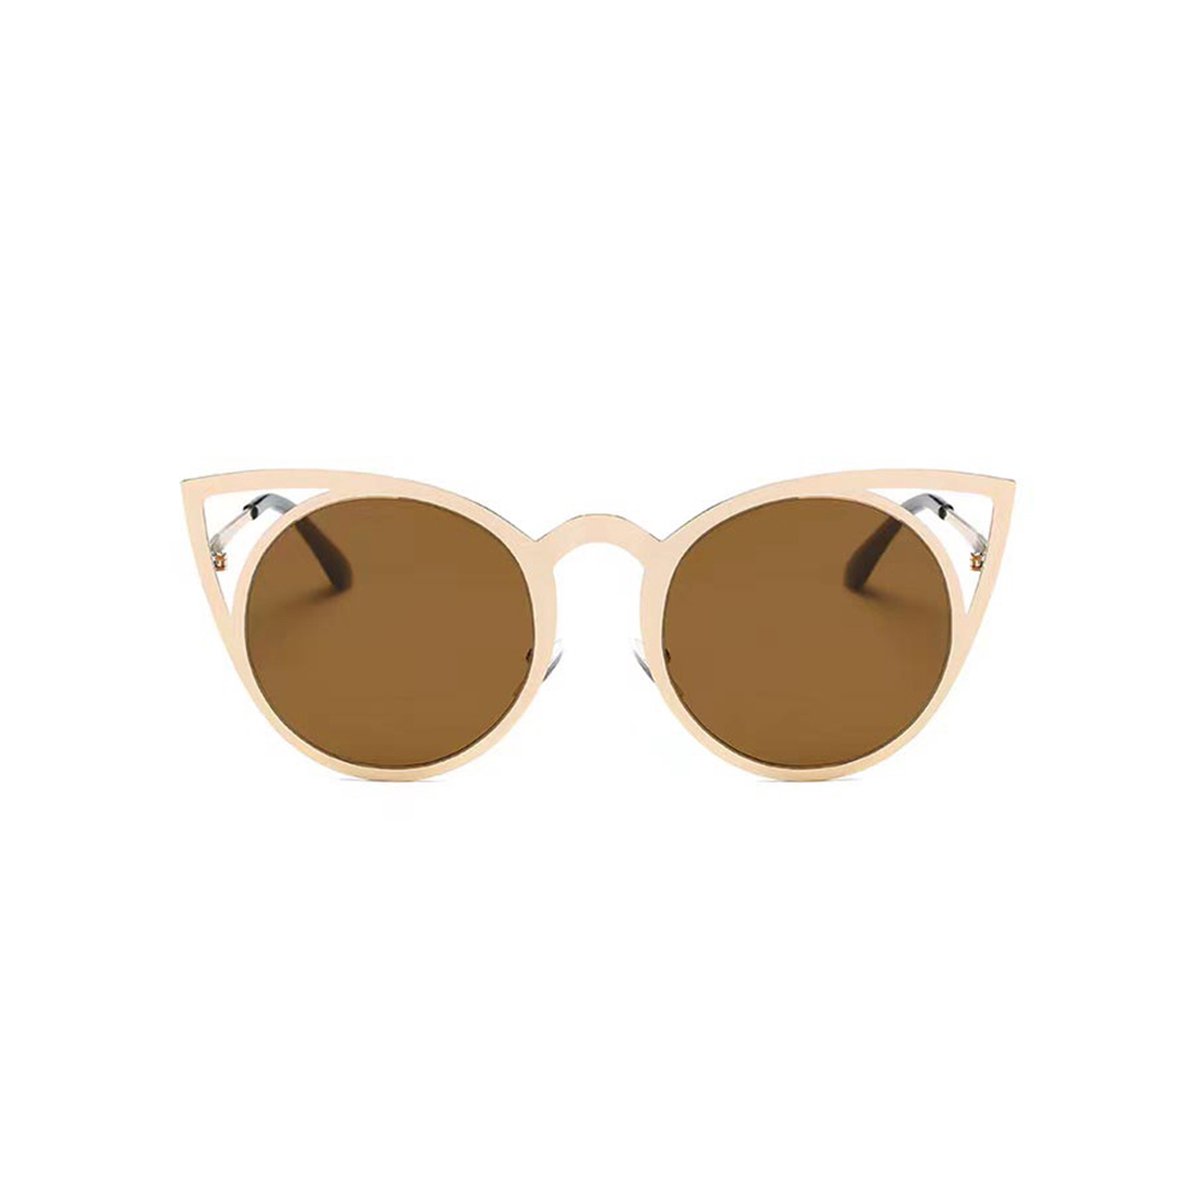 Freaky Glasses - Zonnebril rond met kattenoortjes - Festivalbril - Bril - Feest - Glasses - Heren - Dames - Unisex - Kunststof - bruin - goud